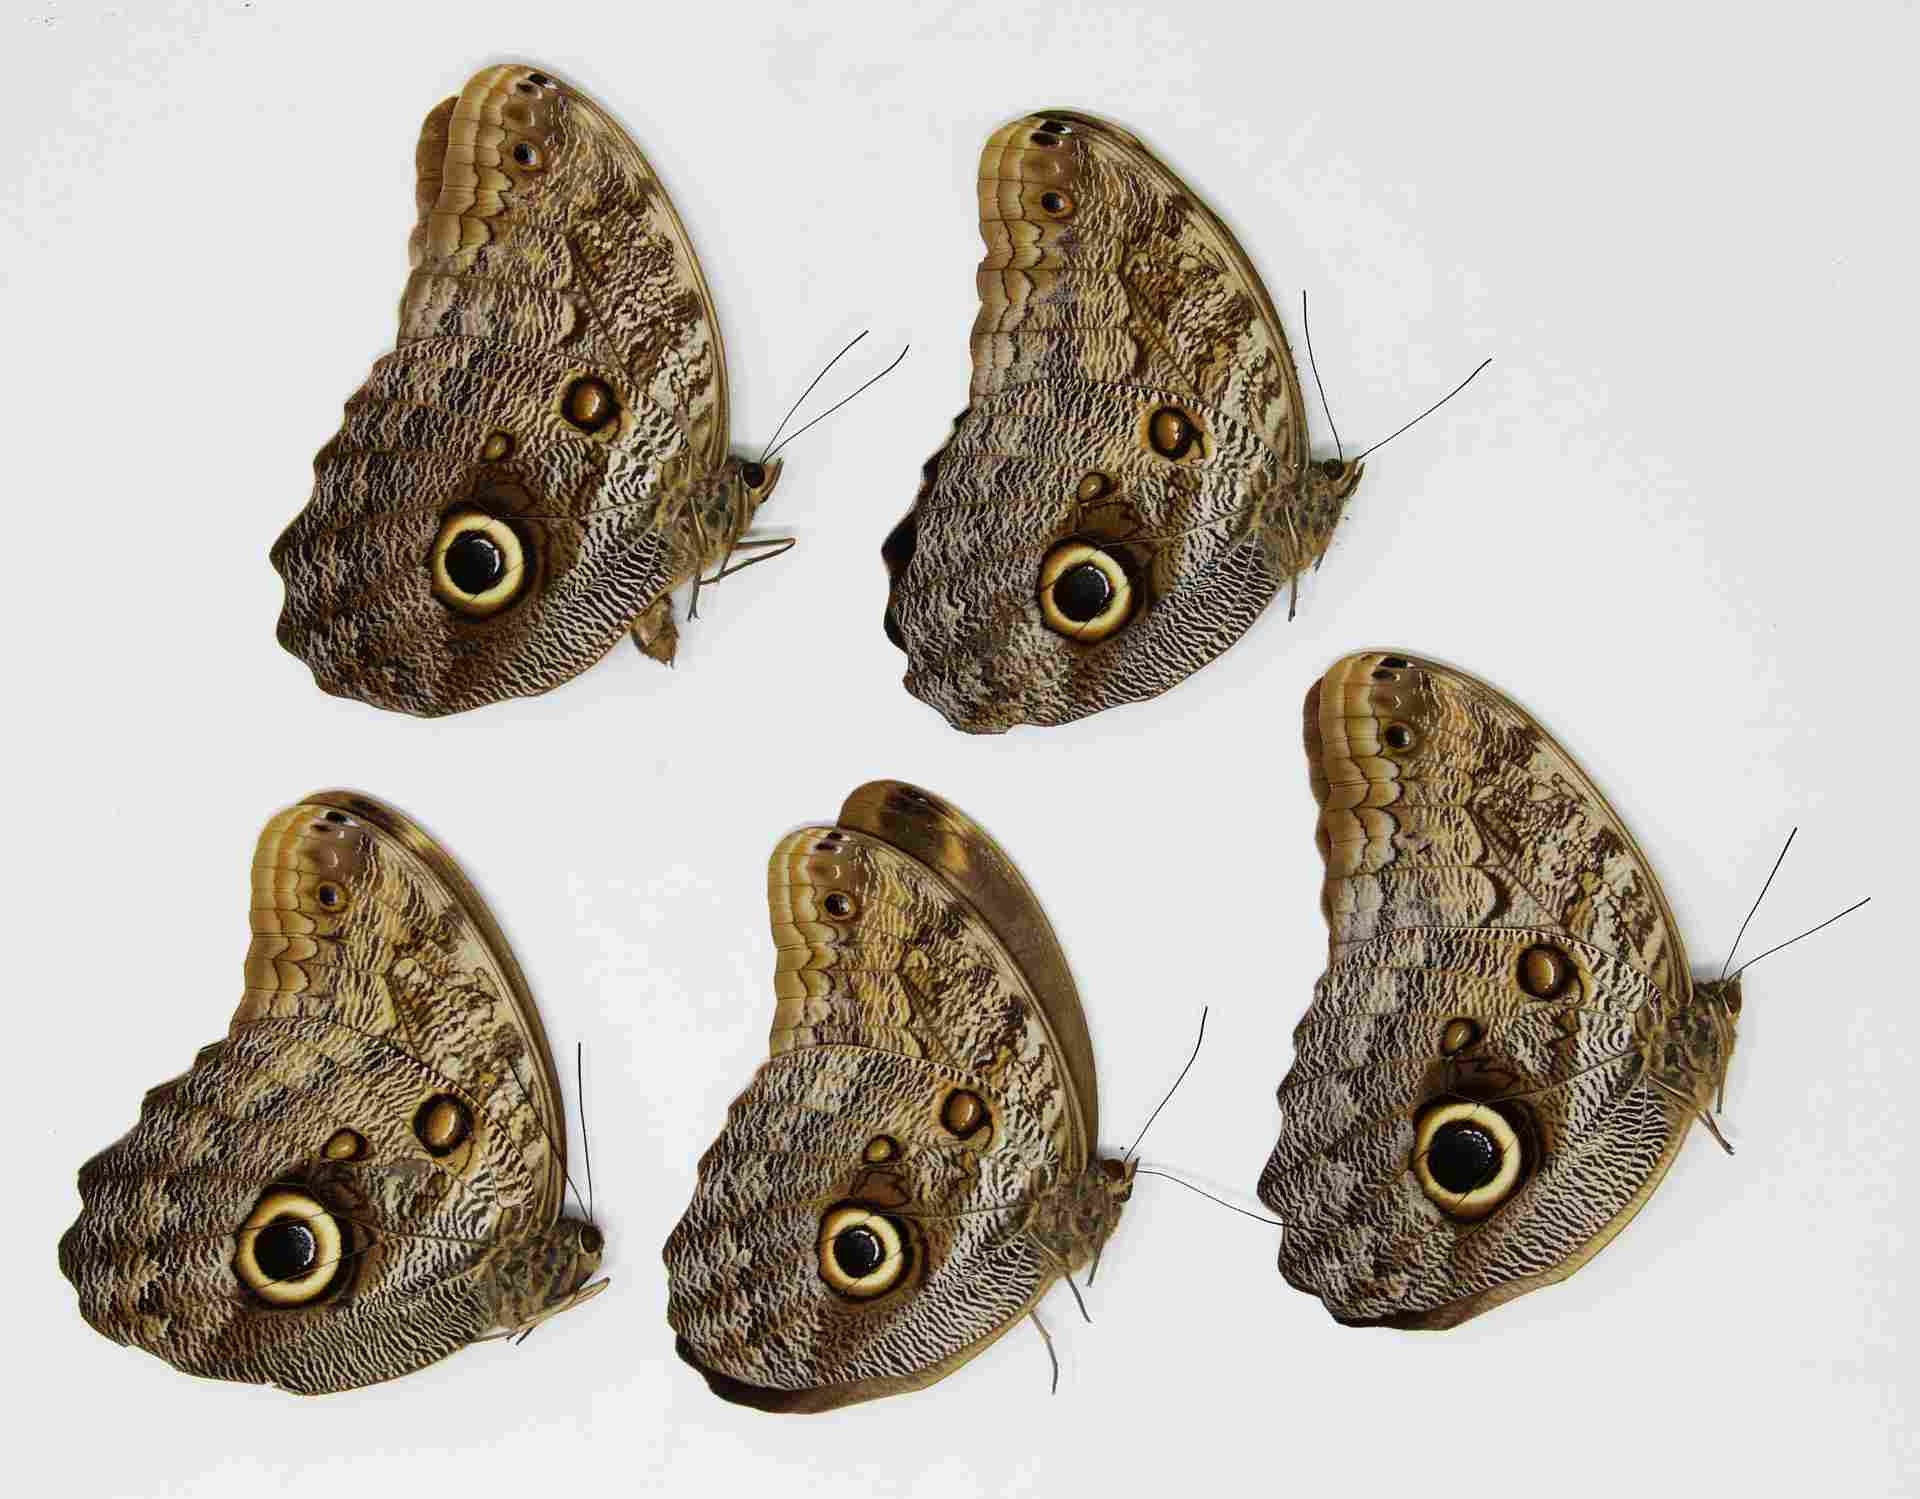 TWO (2) Caligo eurilochus | Giant OWL butterflies | Dry-preserved specimens